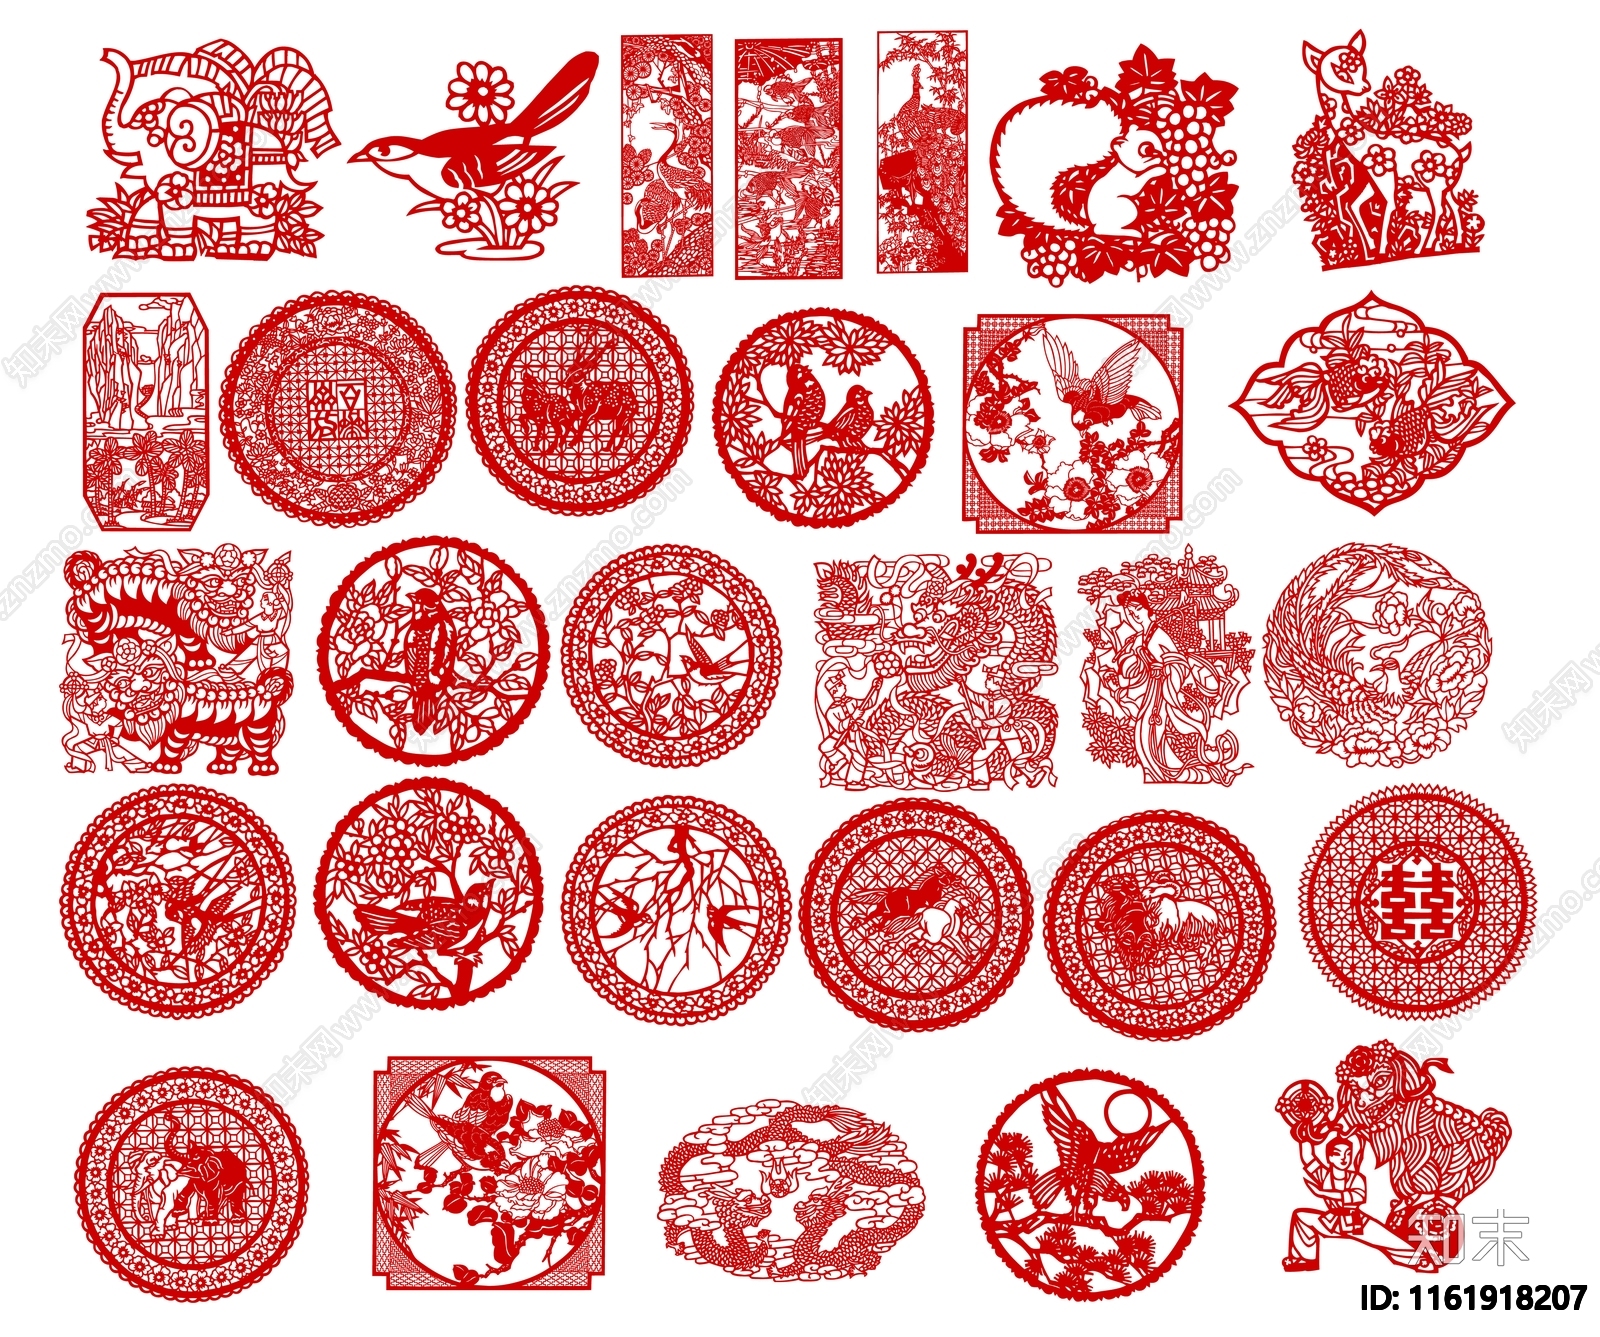 PSD免抠春节传统剪纸素材贴图下载【ID:1161918207】